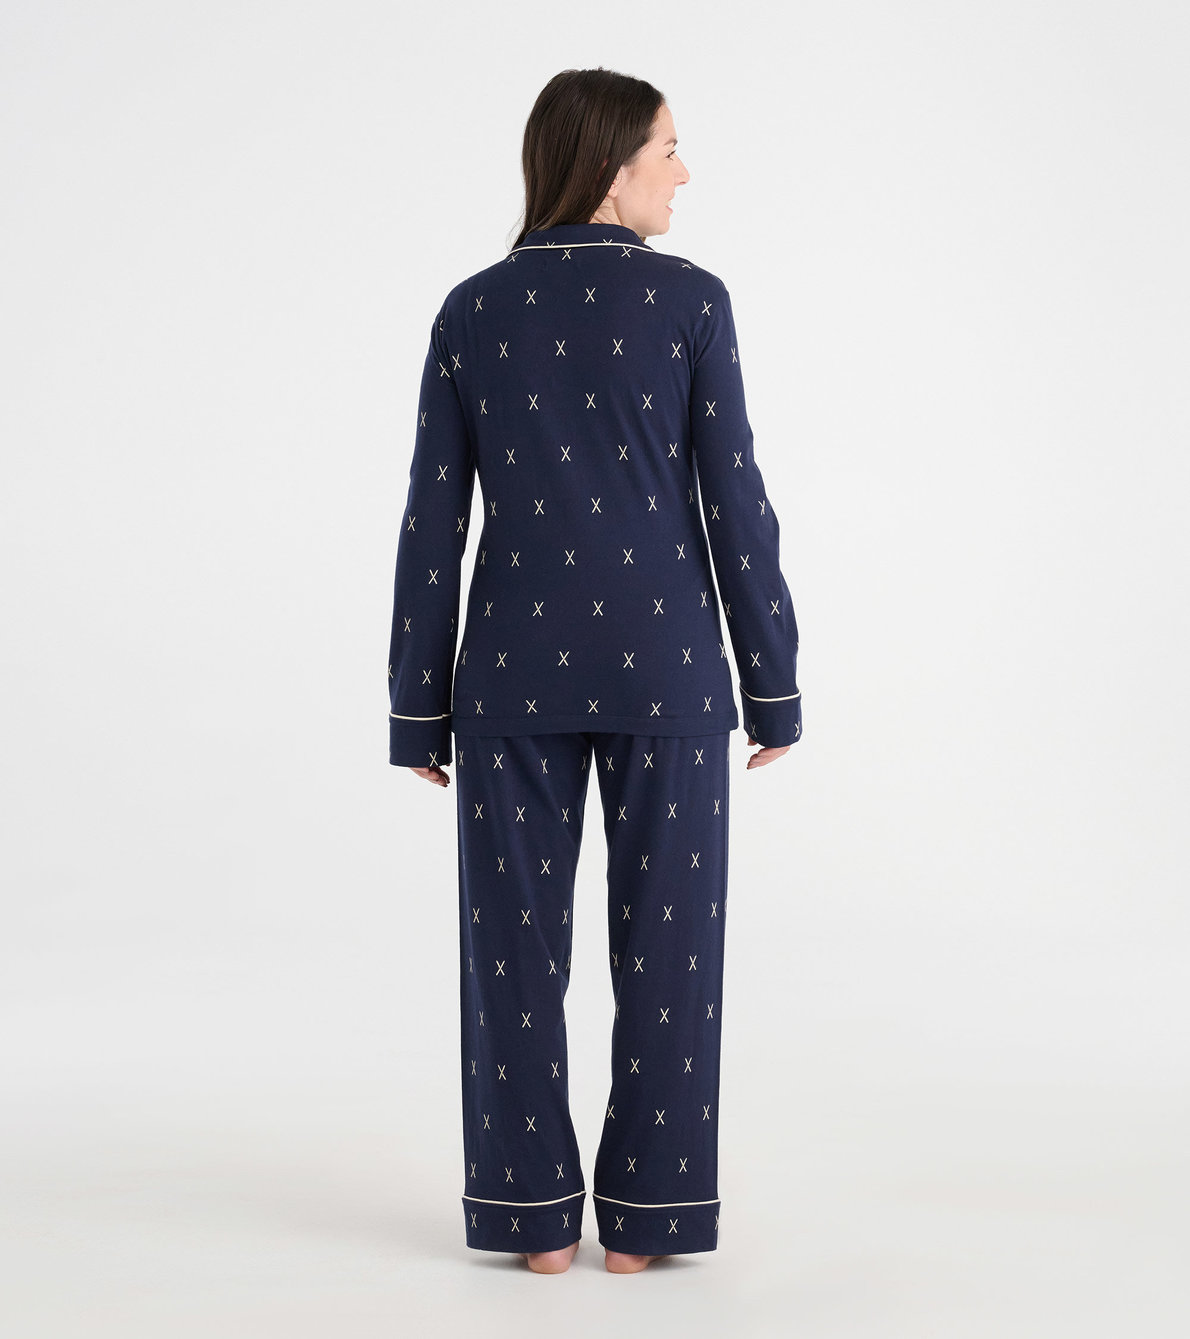 View larger image of Women's Navy Ski Button Down Jersey Pajama Set